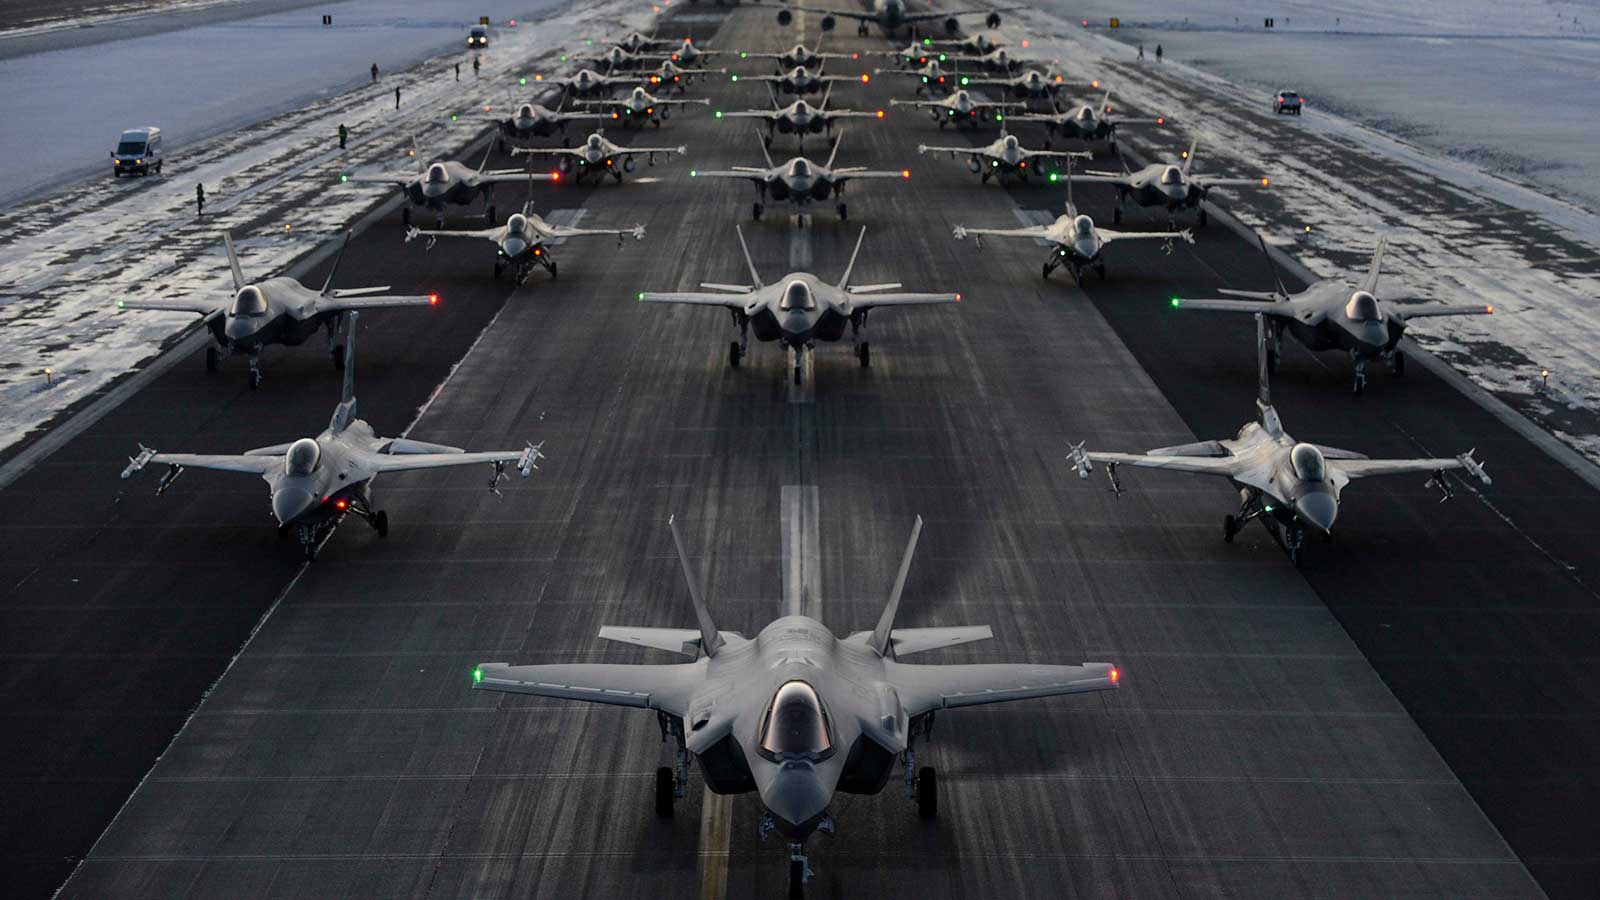 Pratt & Whitney  fighter jet deck